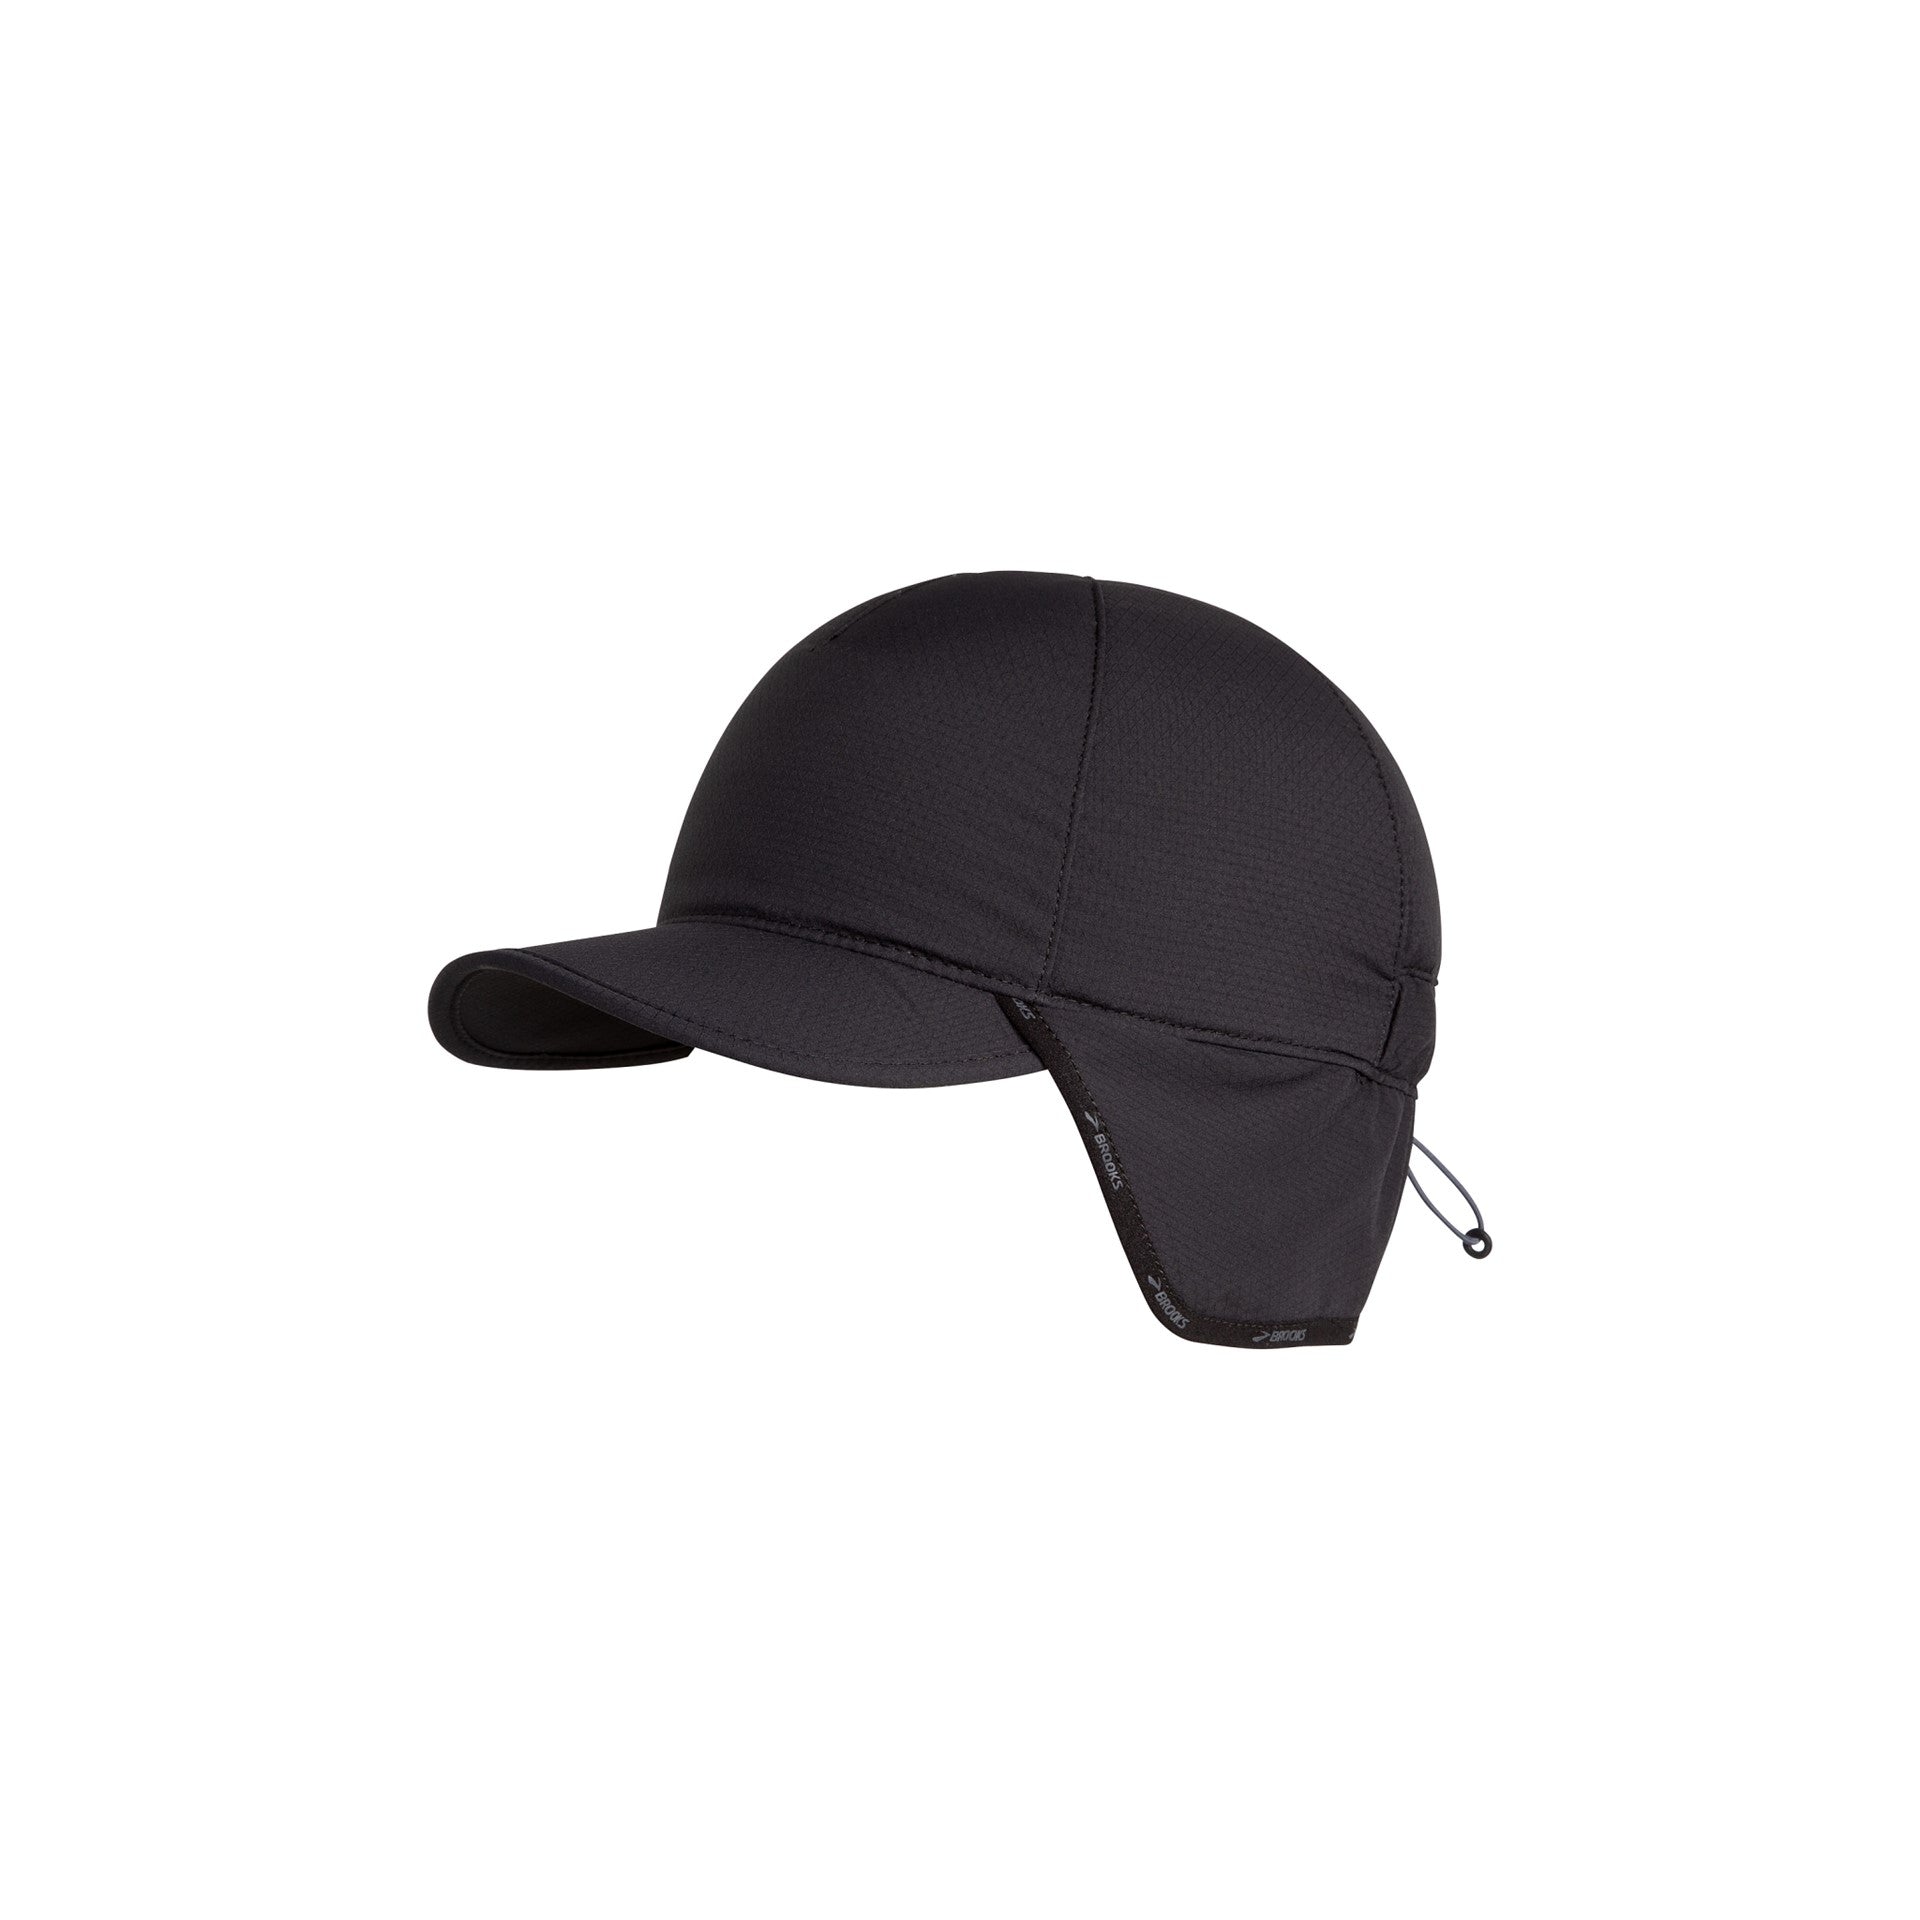 shield hybrid hat 2 0 001 BLACK